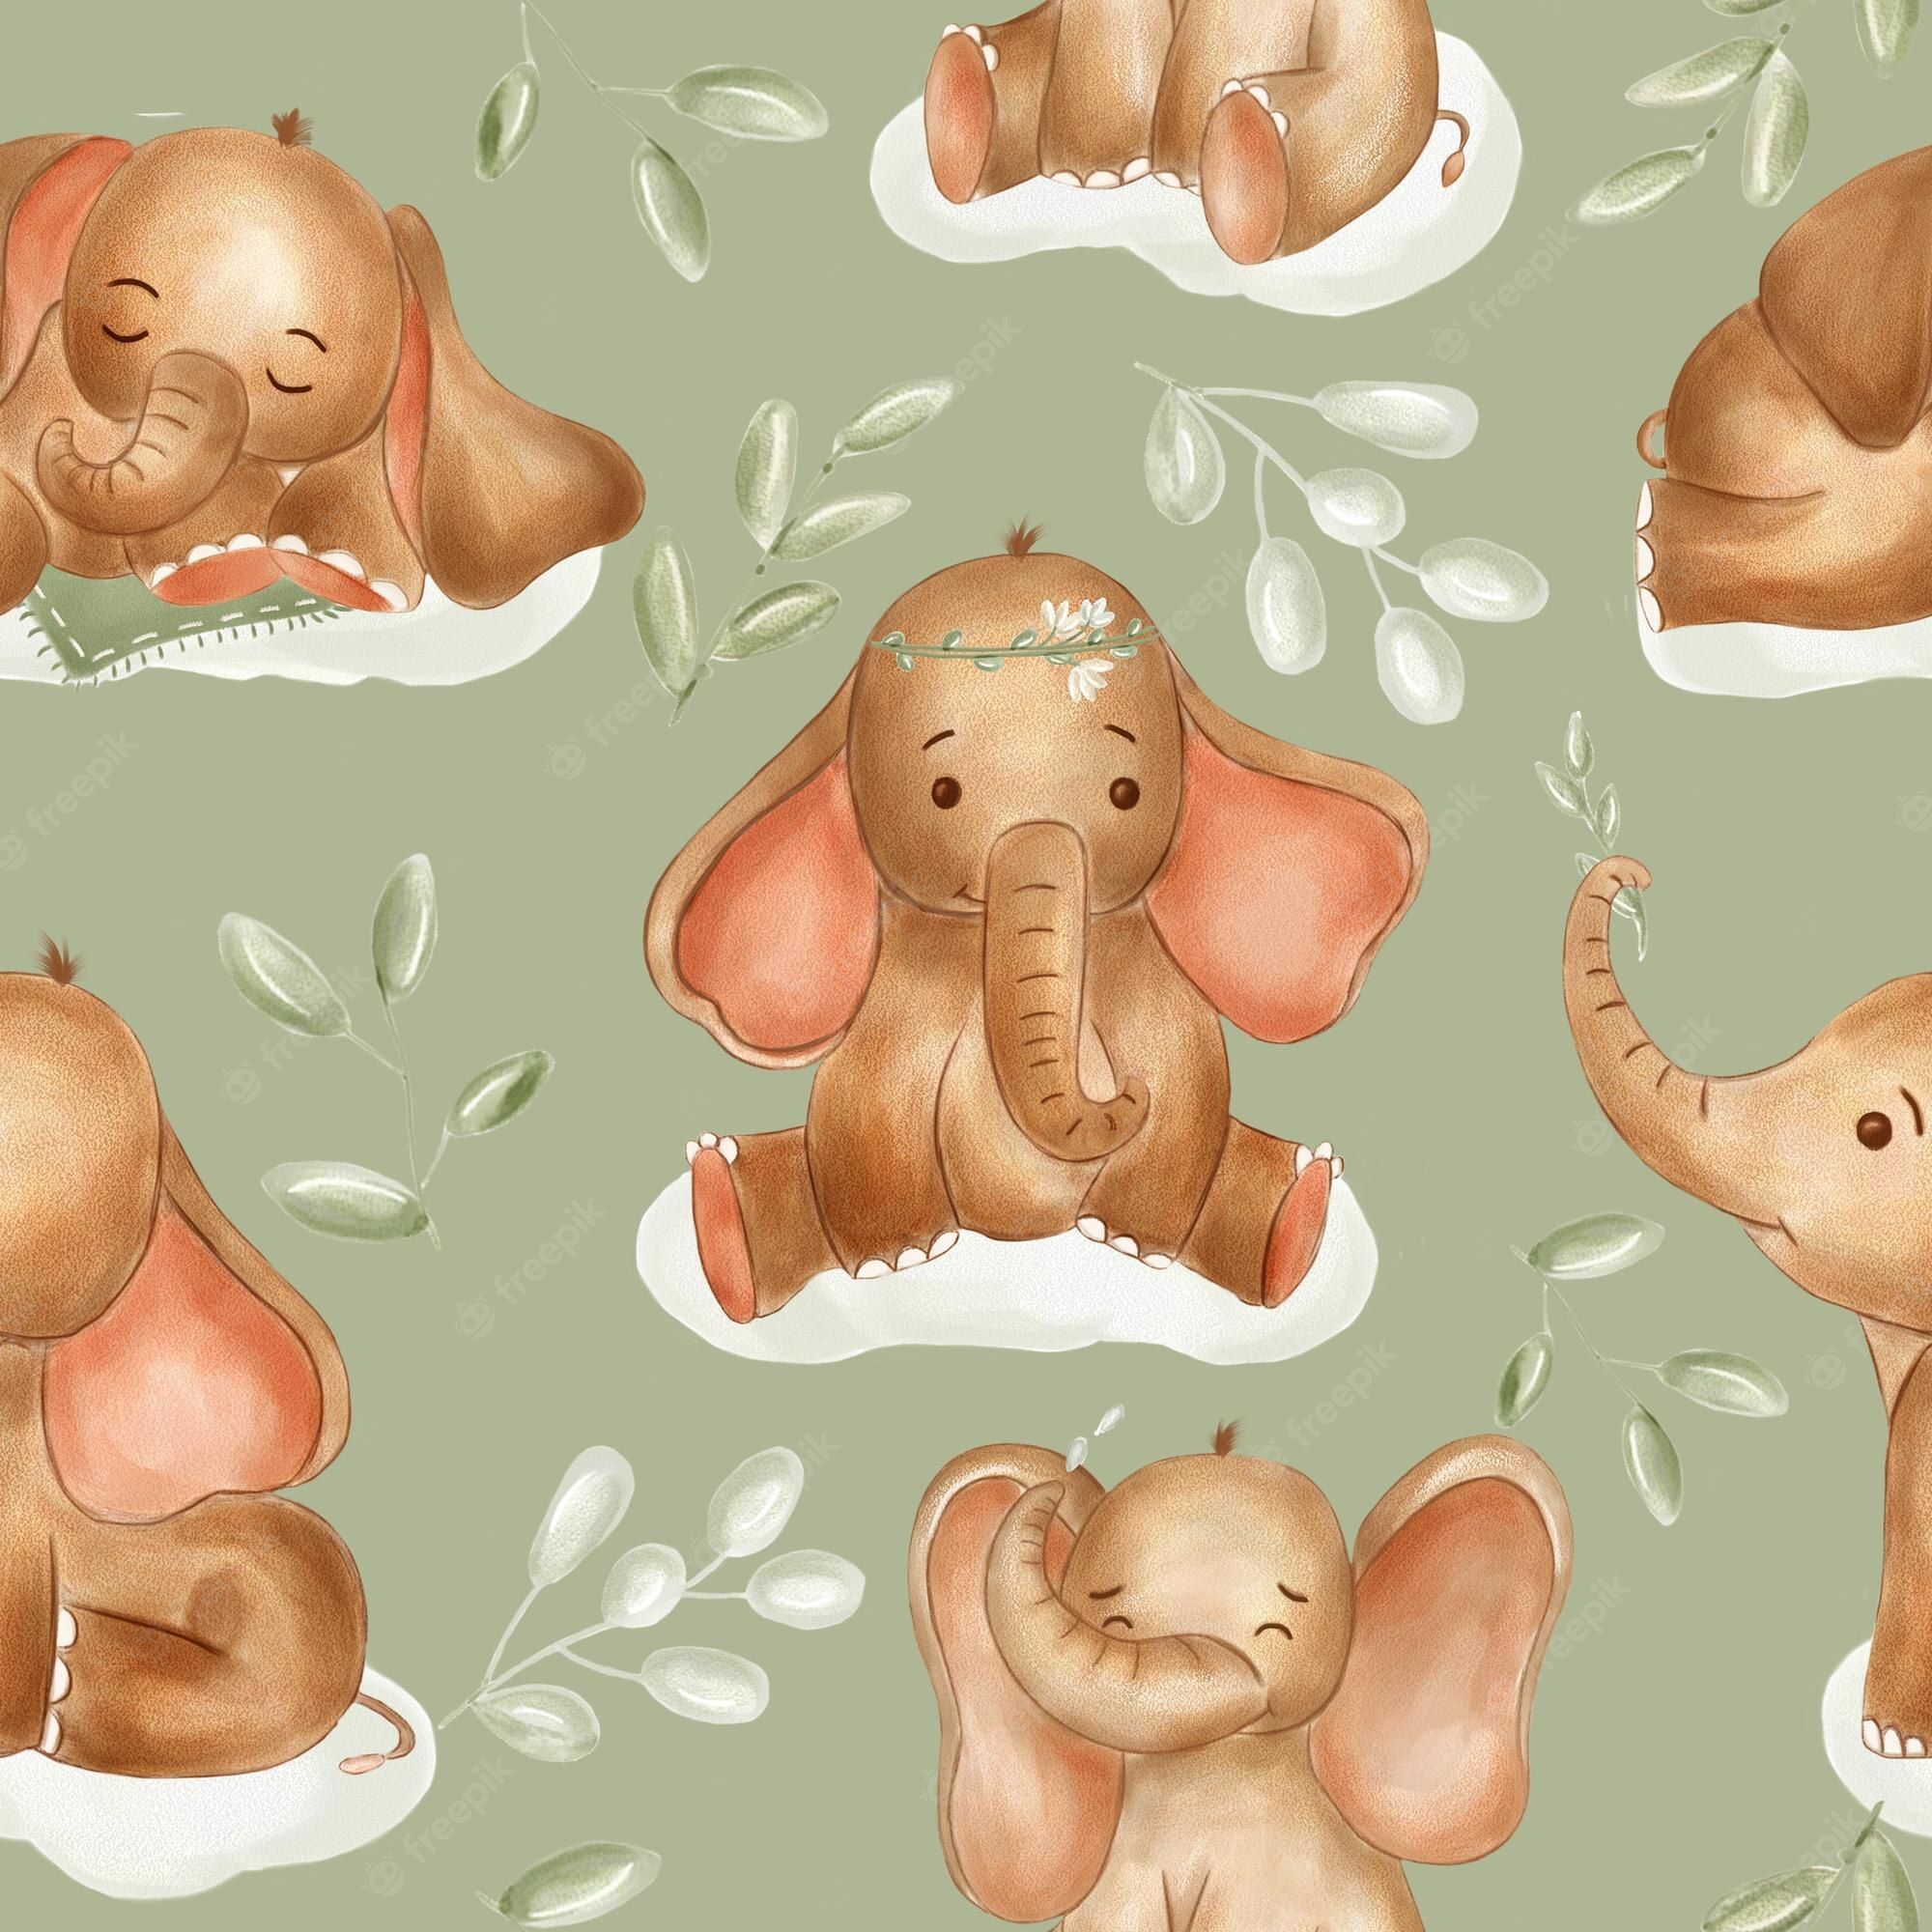 Elephant Wallpaper Image